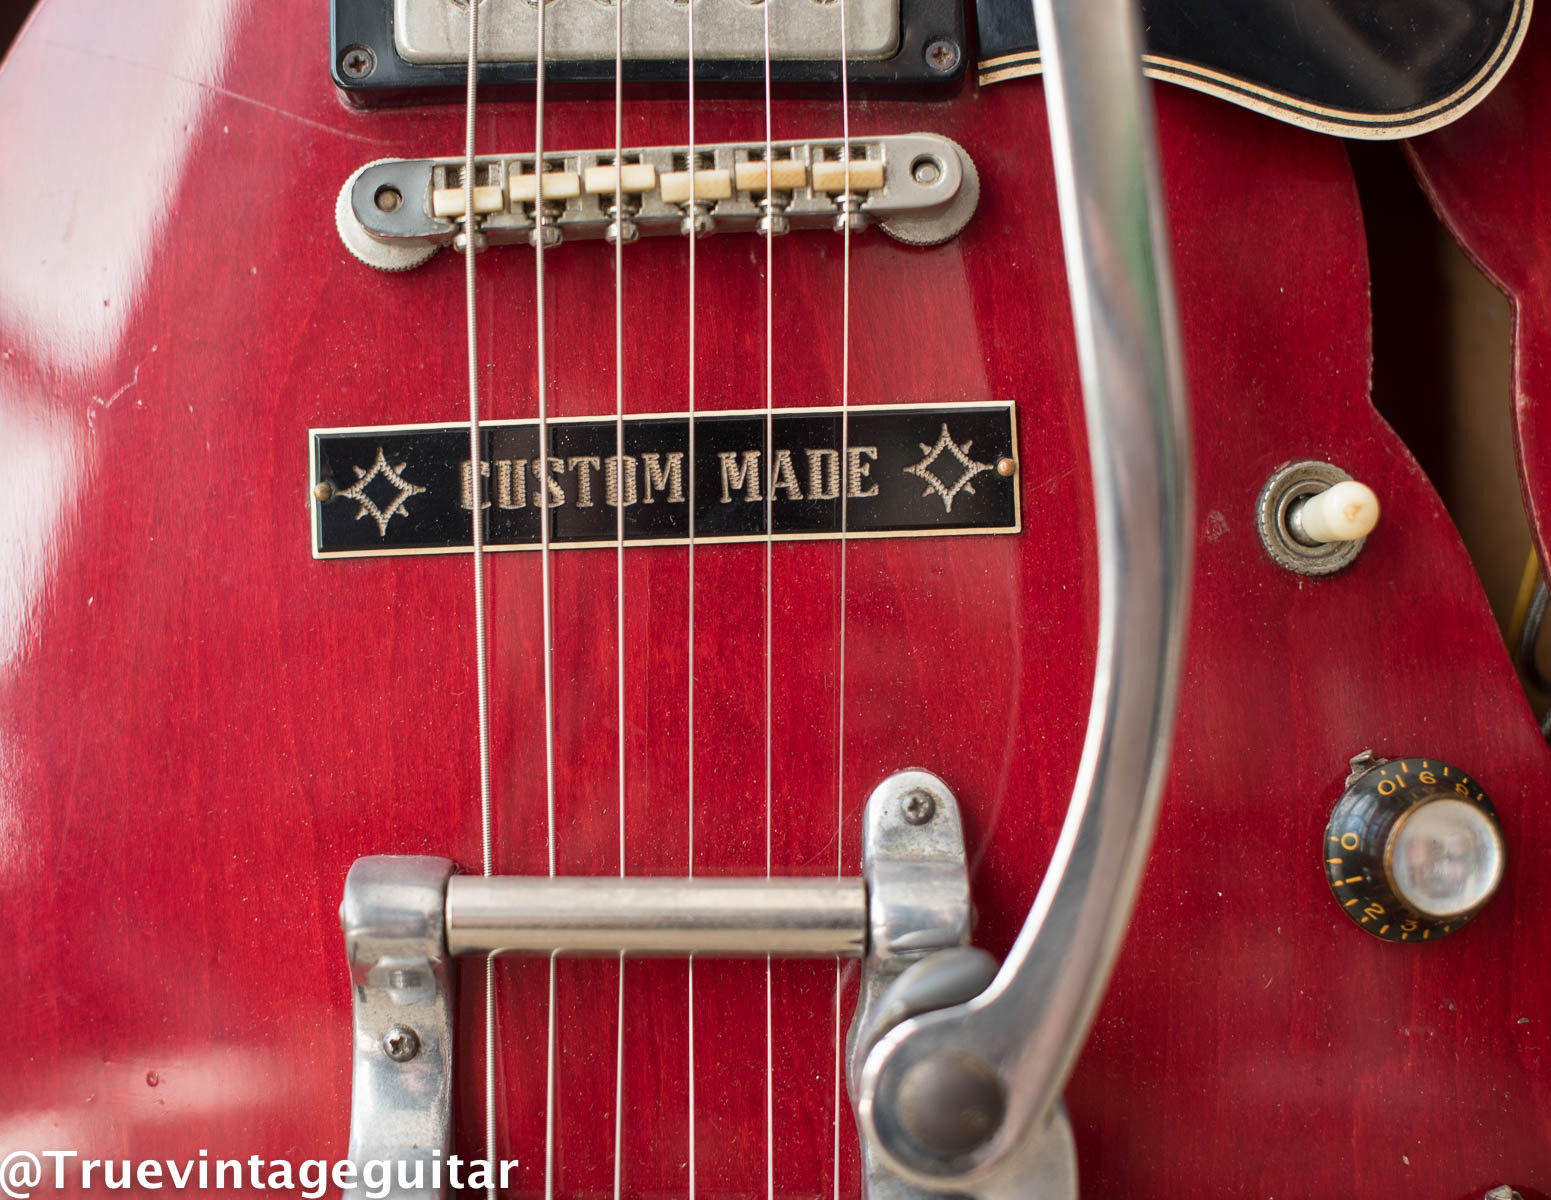 Custom Made plaque, Vintage 1964 Gibson ES-335 guitar, Bigbsy tailpiece